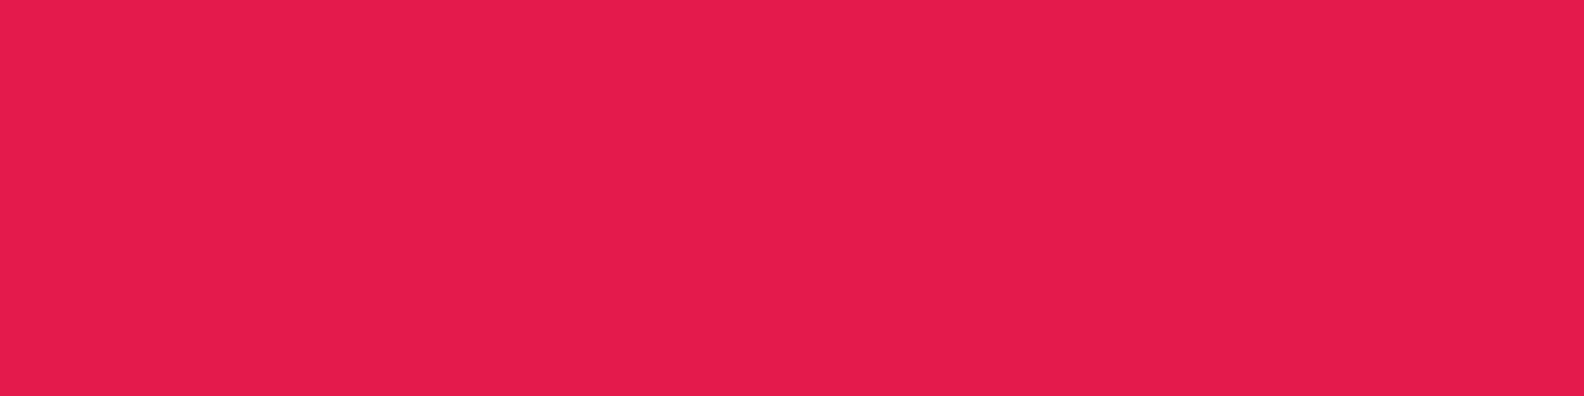 1584x396 Spanish Crimson Solid Color Background